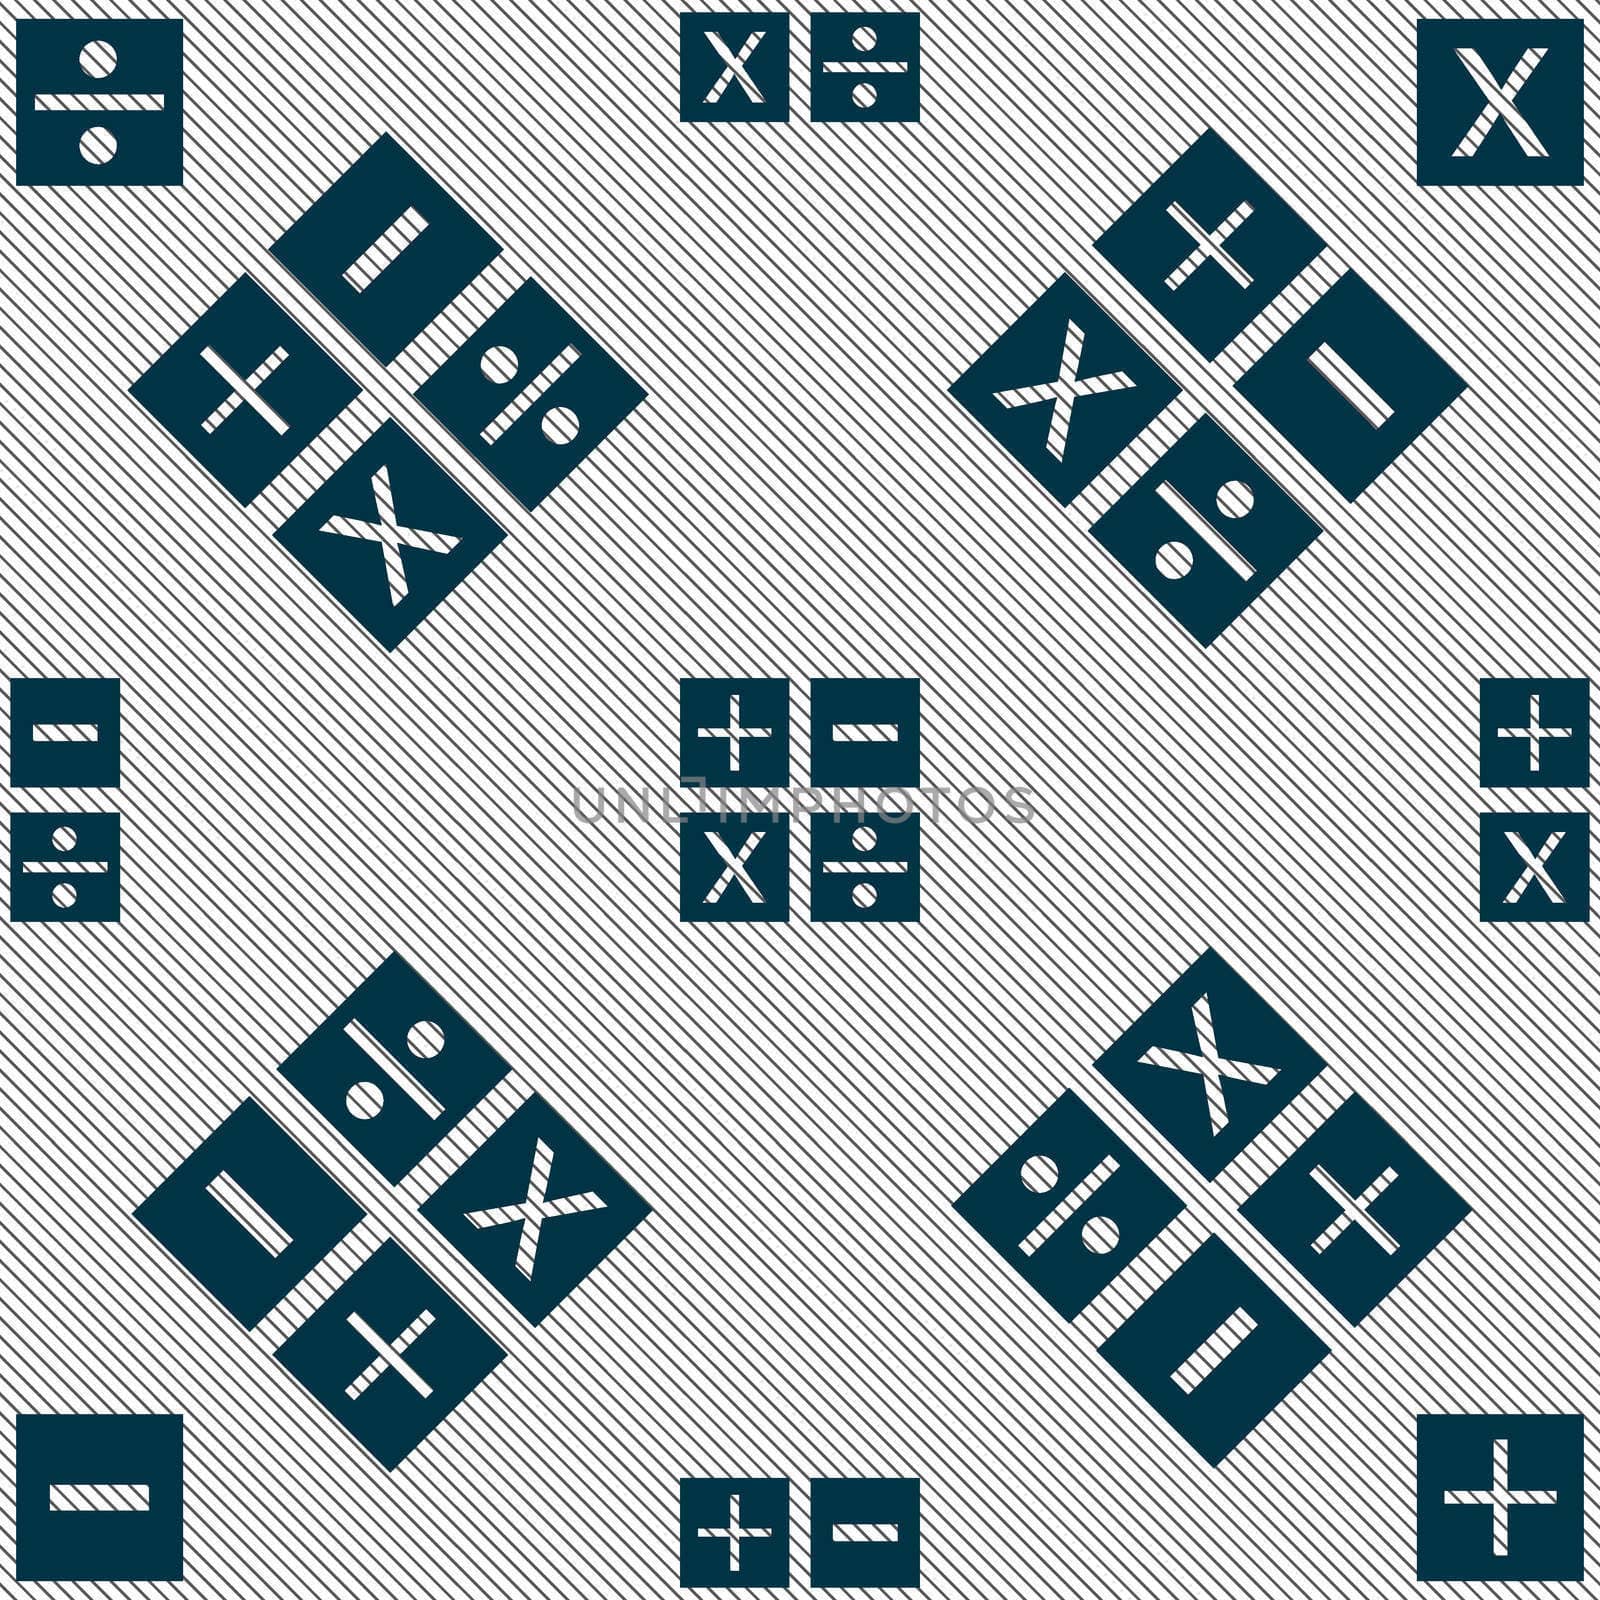 Multiplication, division, plus, minus icon Math symbol Mathematics. Seamless pattern with geometric texture. illustration